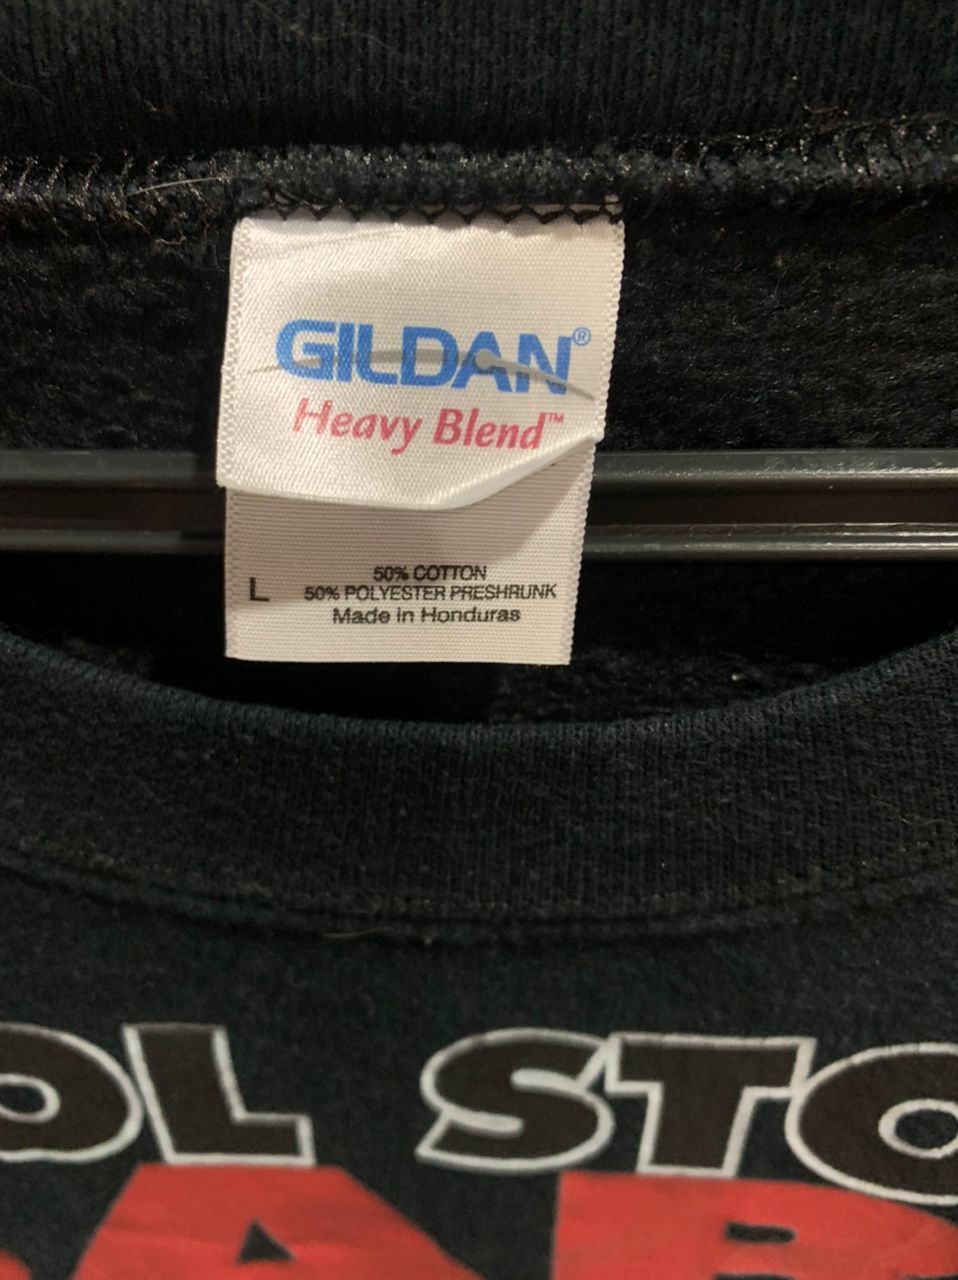 Gildan Vintage 90s Cool Story Babe Now Roll Me A Blunt Sweatshirt Size US L / EU 52-54 / 3 - 9 Preview